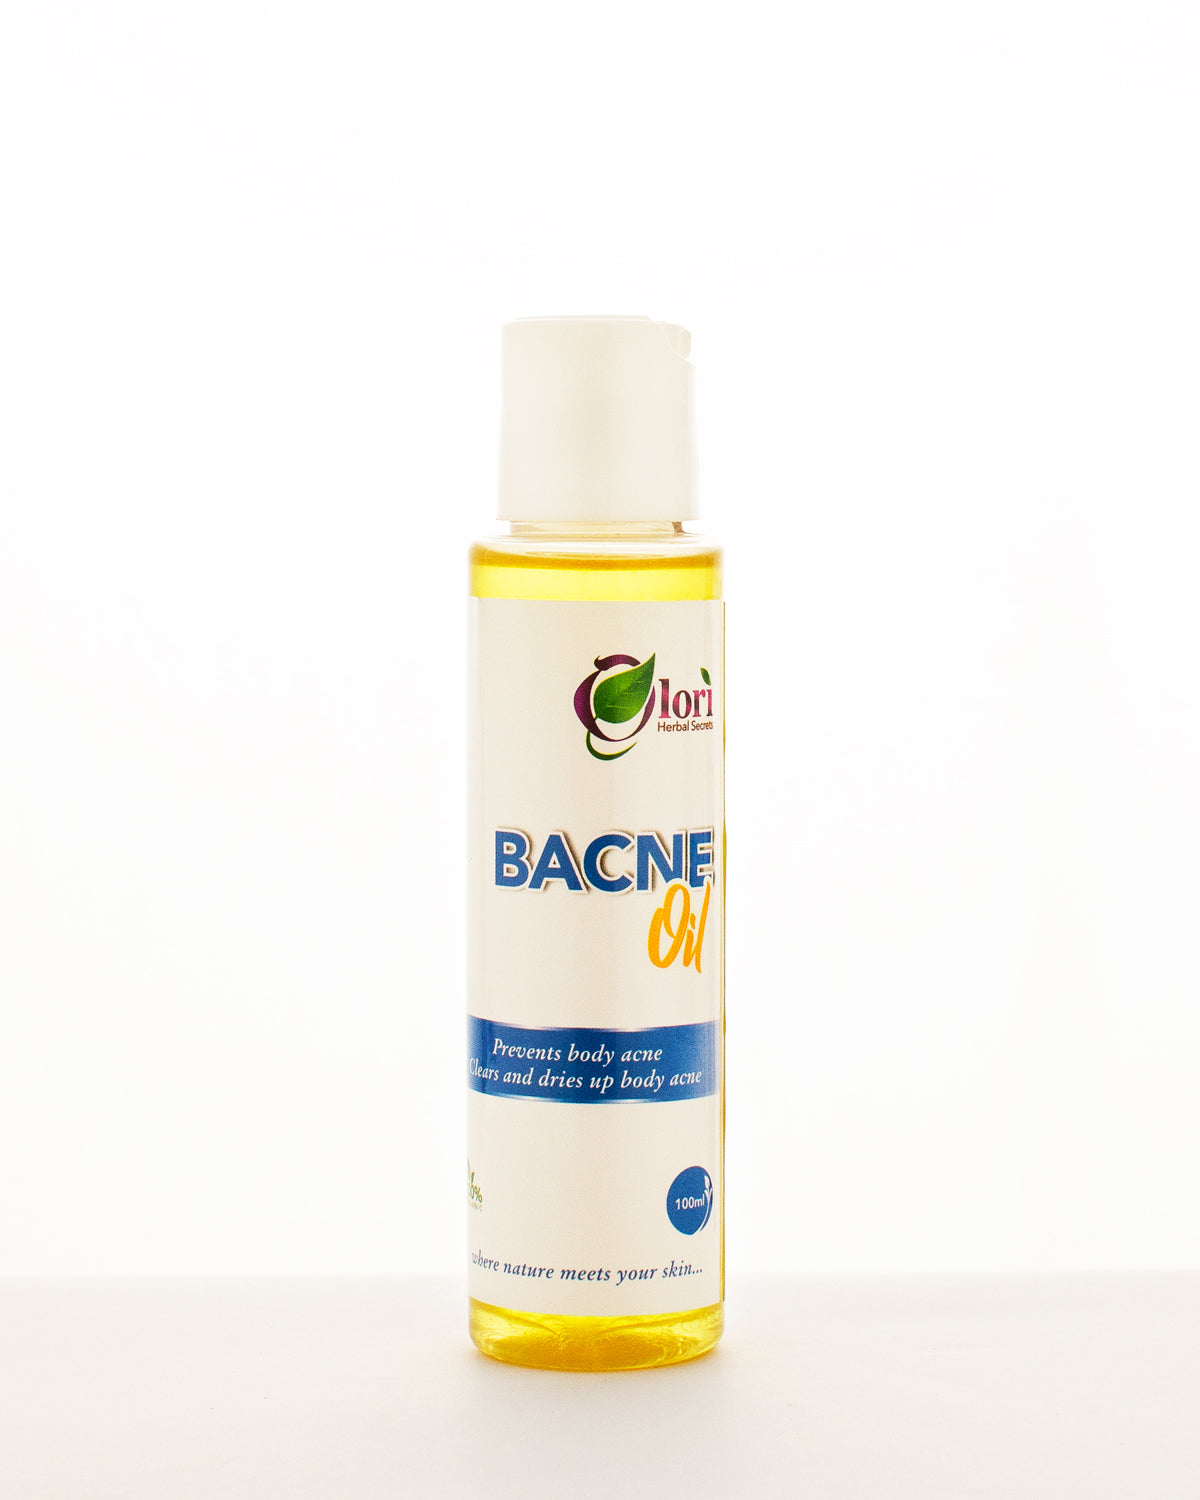 Bacne oil